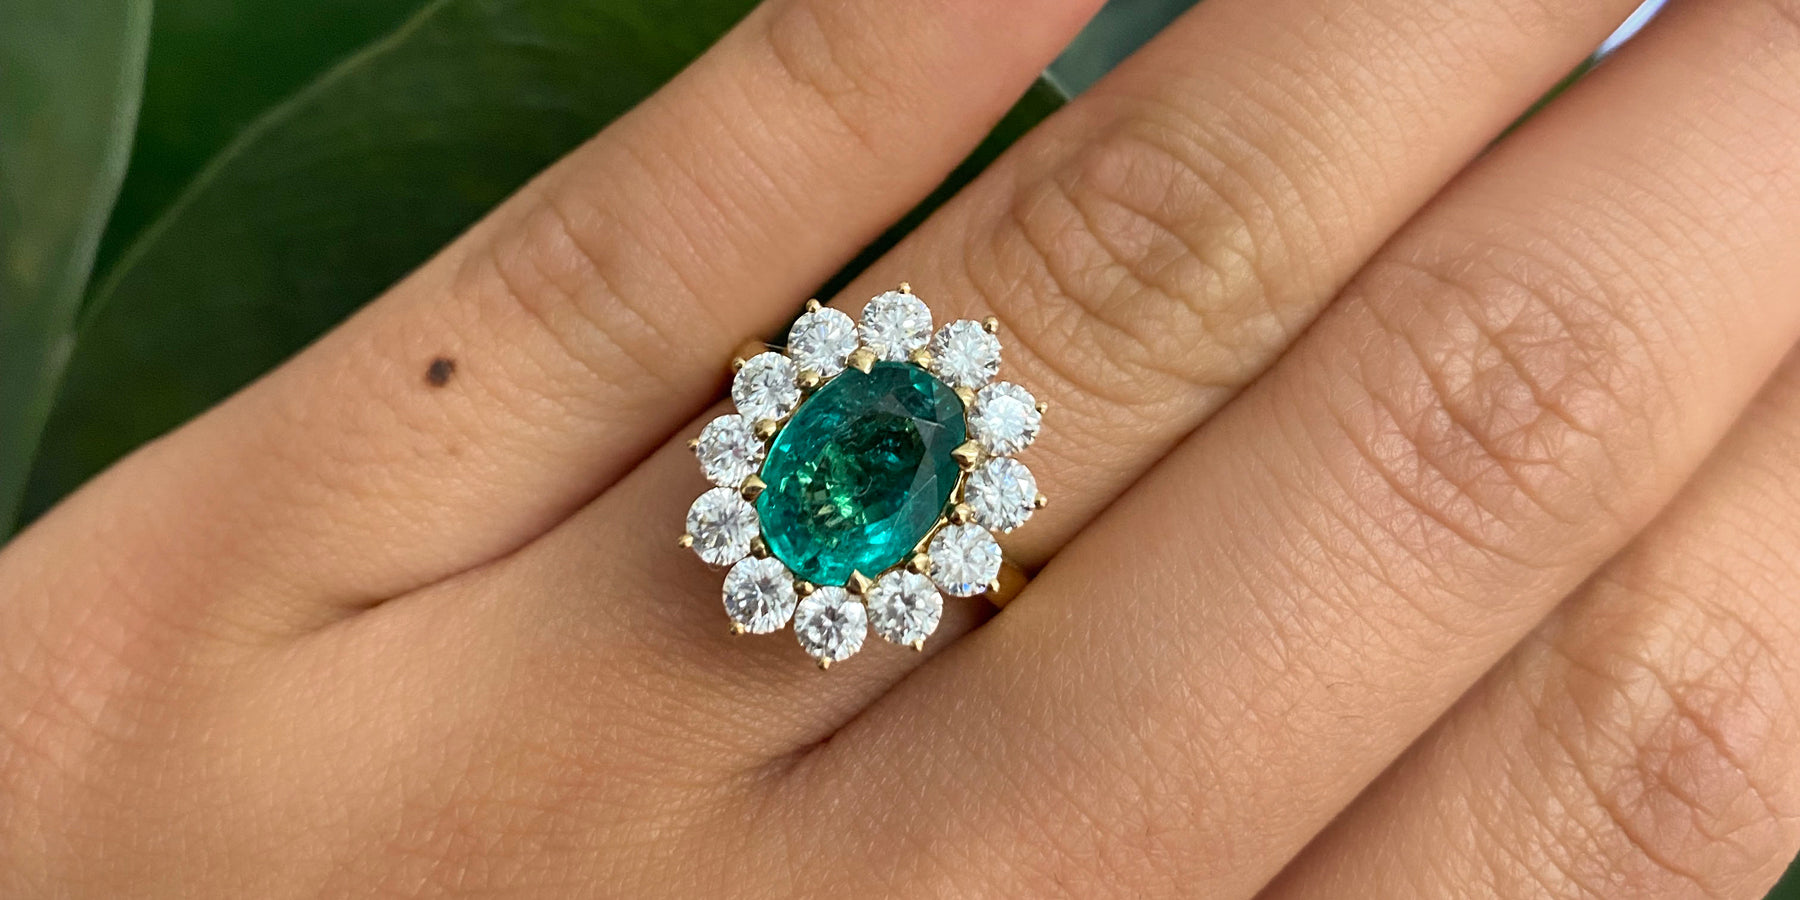 Woman wearing bespoke oval cut Emerald Star engagement ring from fine gemstone jeweller Fenton